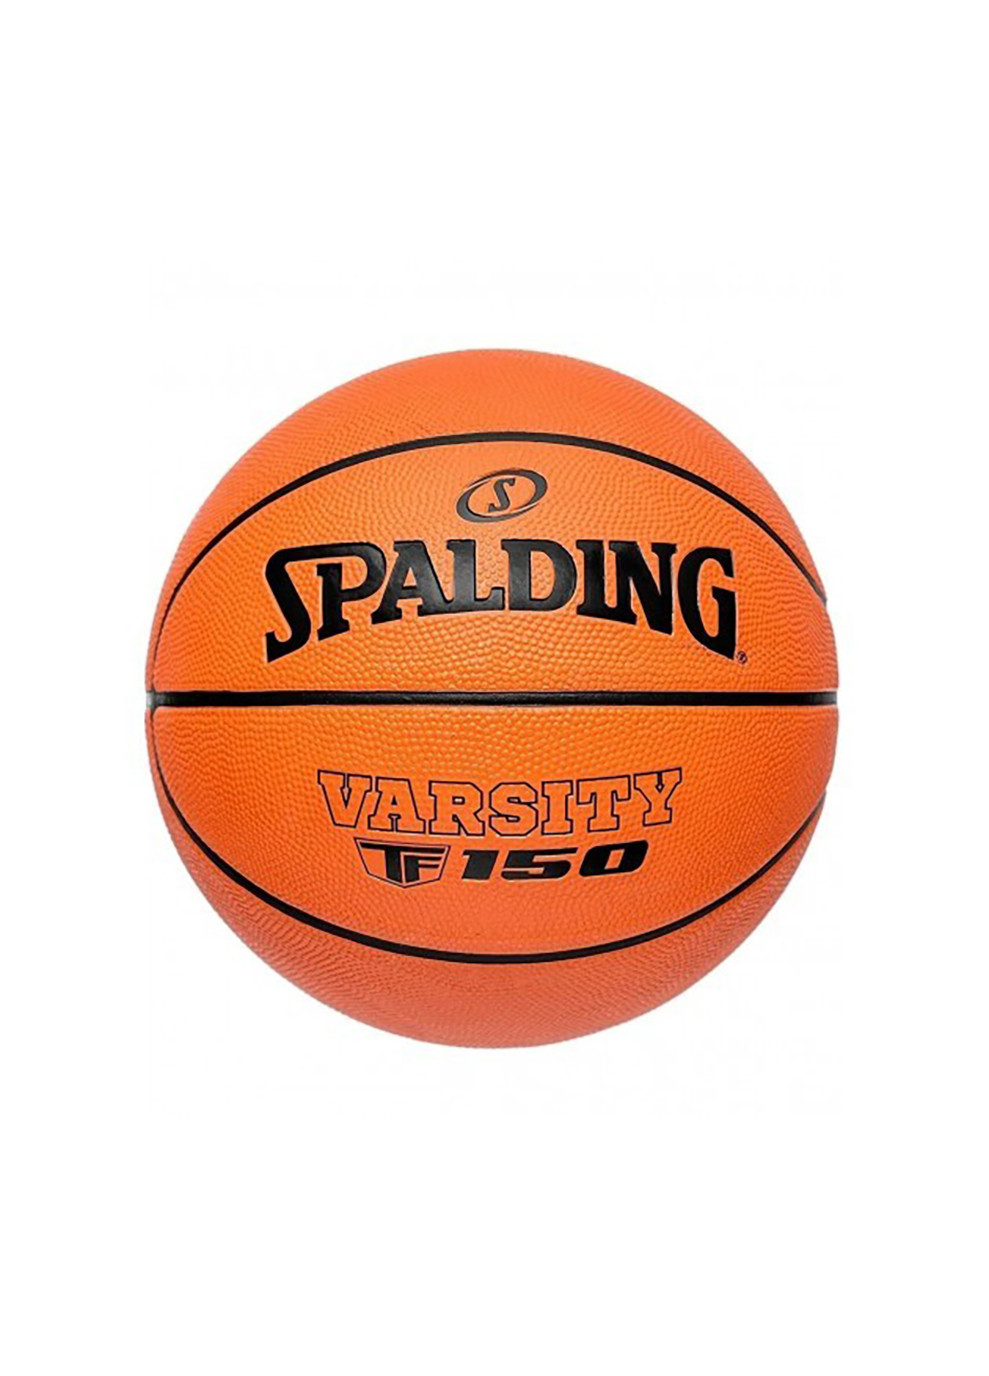 М'яч баскетбольний Varsity TF-150 FIBA помаранчевий Spalding (260633220)